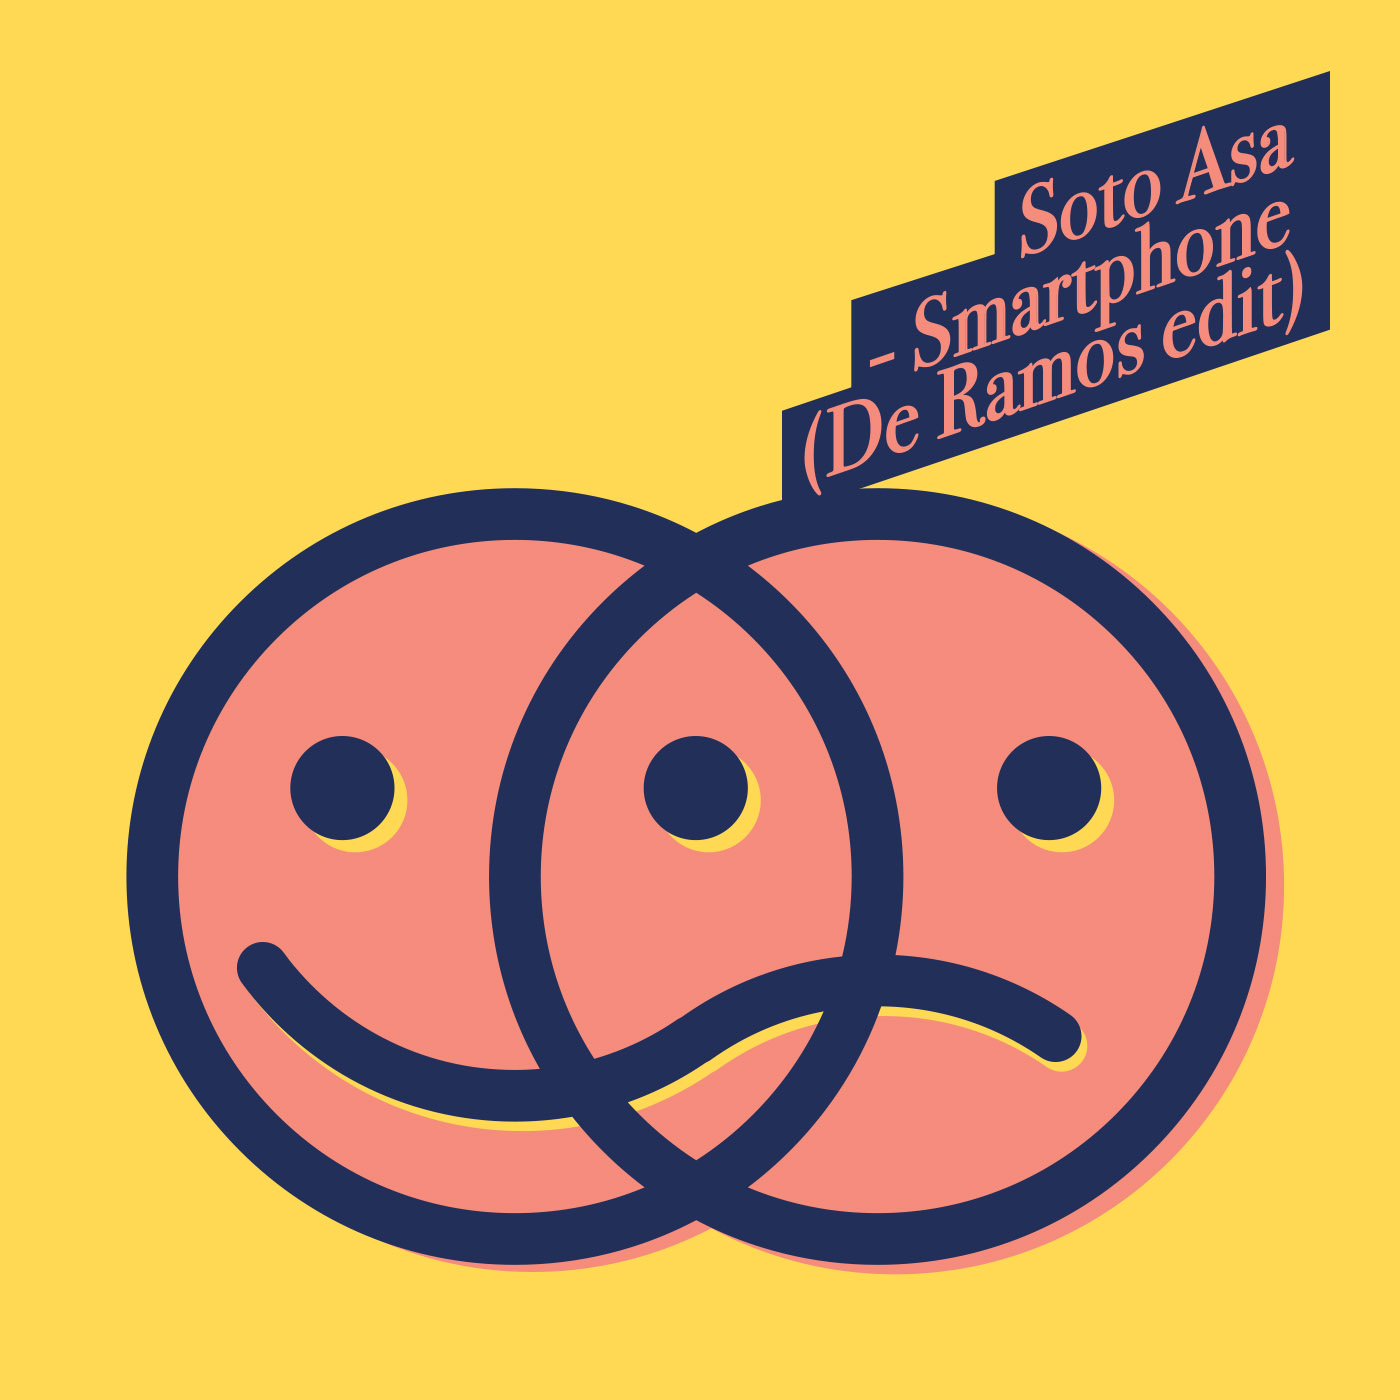 Soto Asa - Smartphone (De Ramos edit)